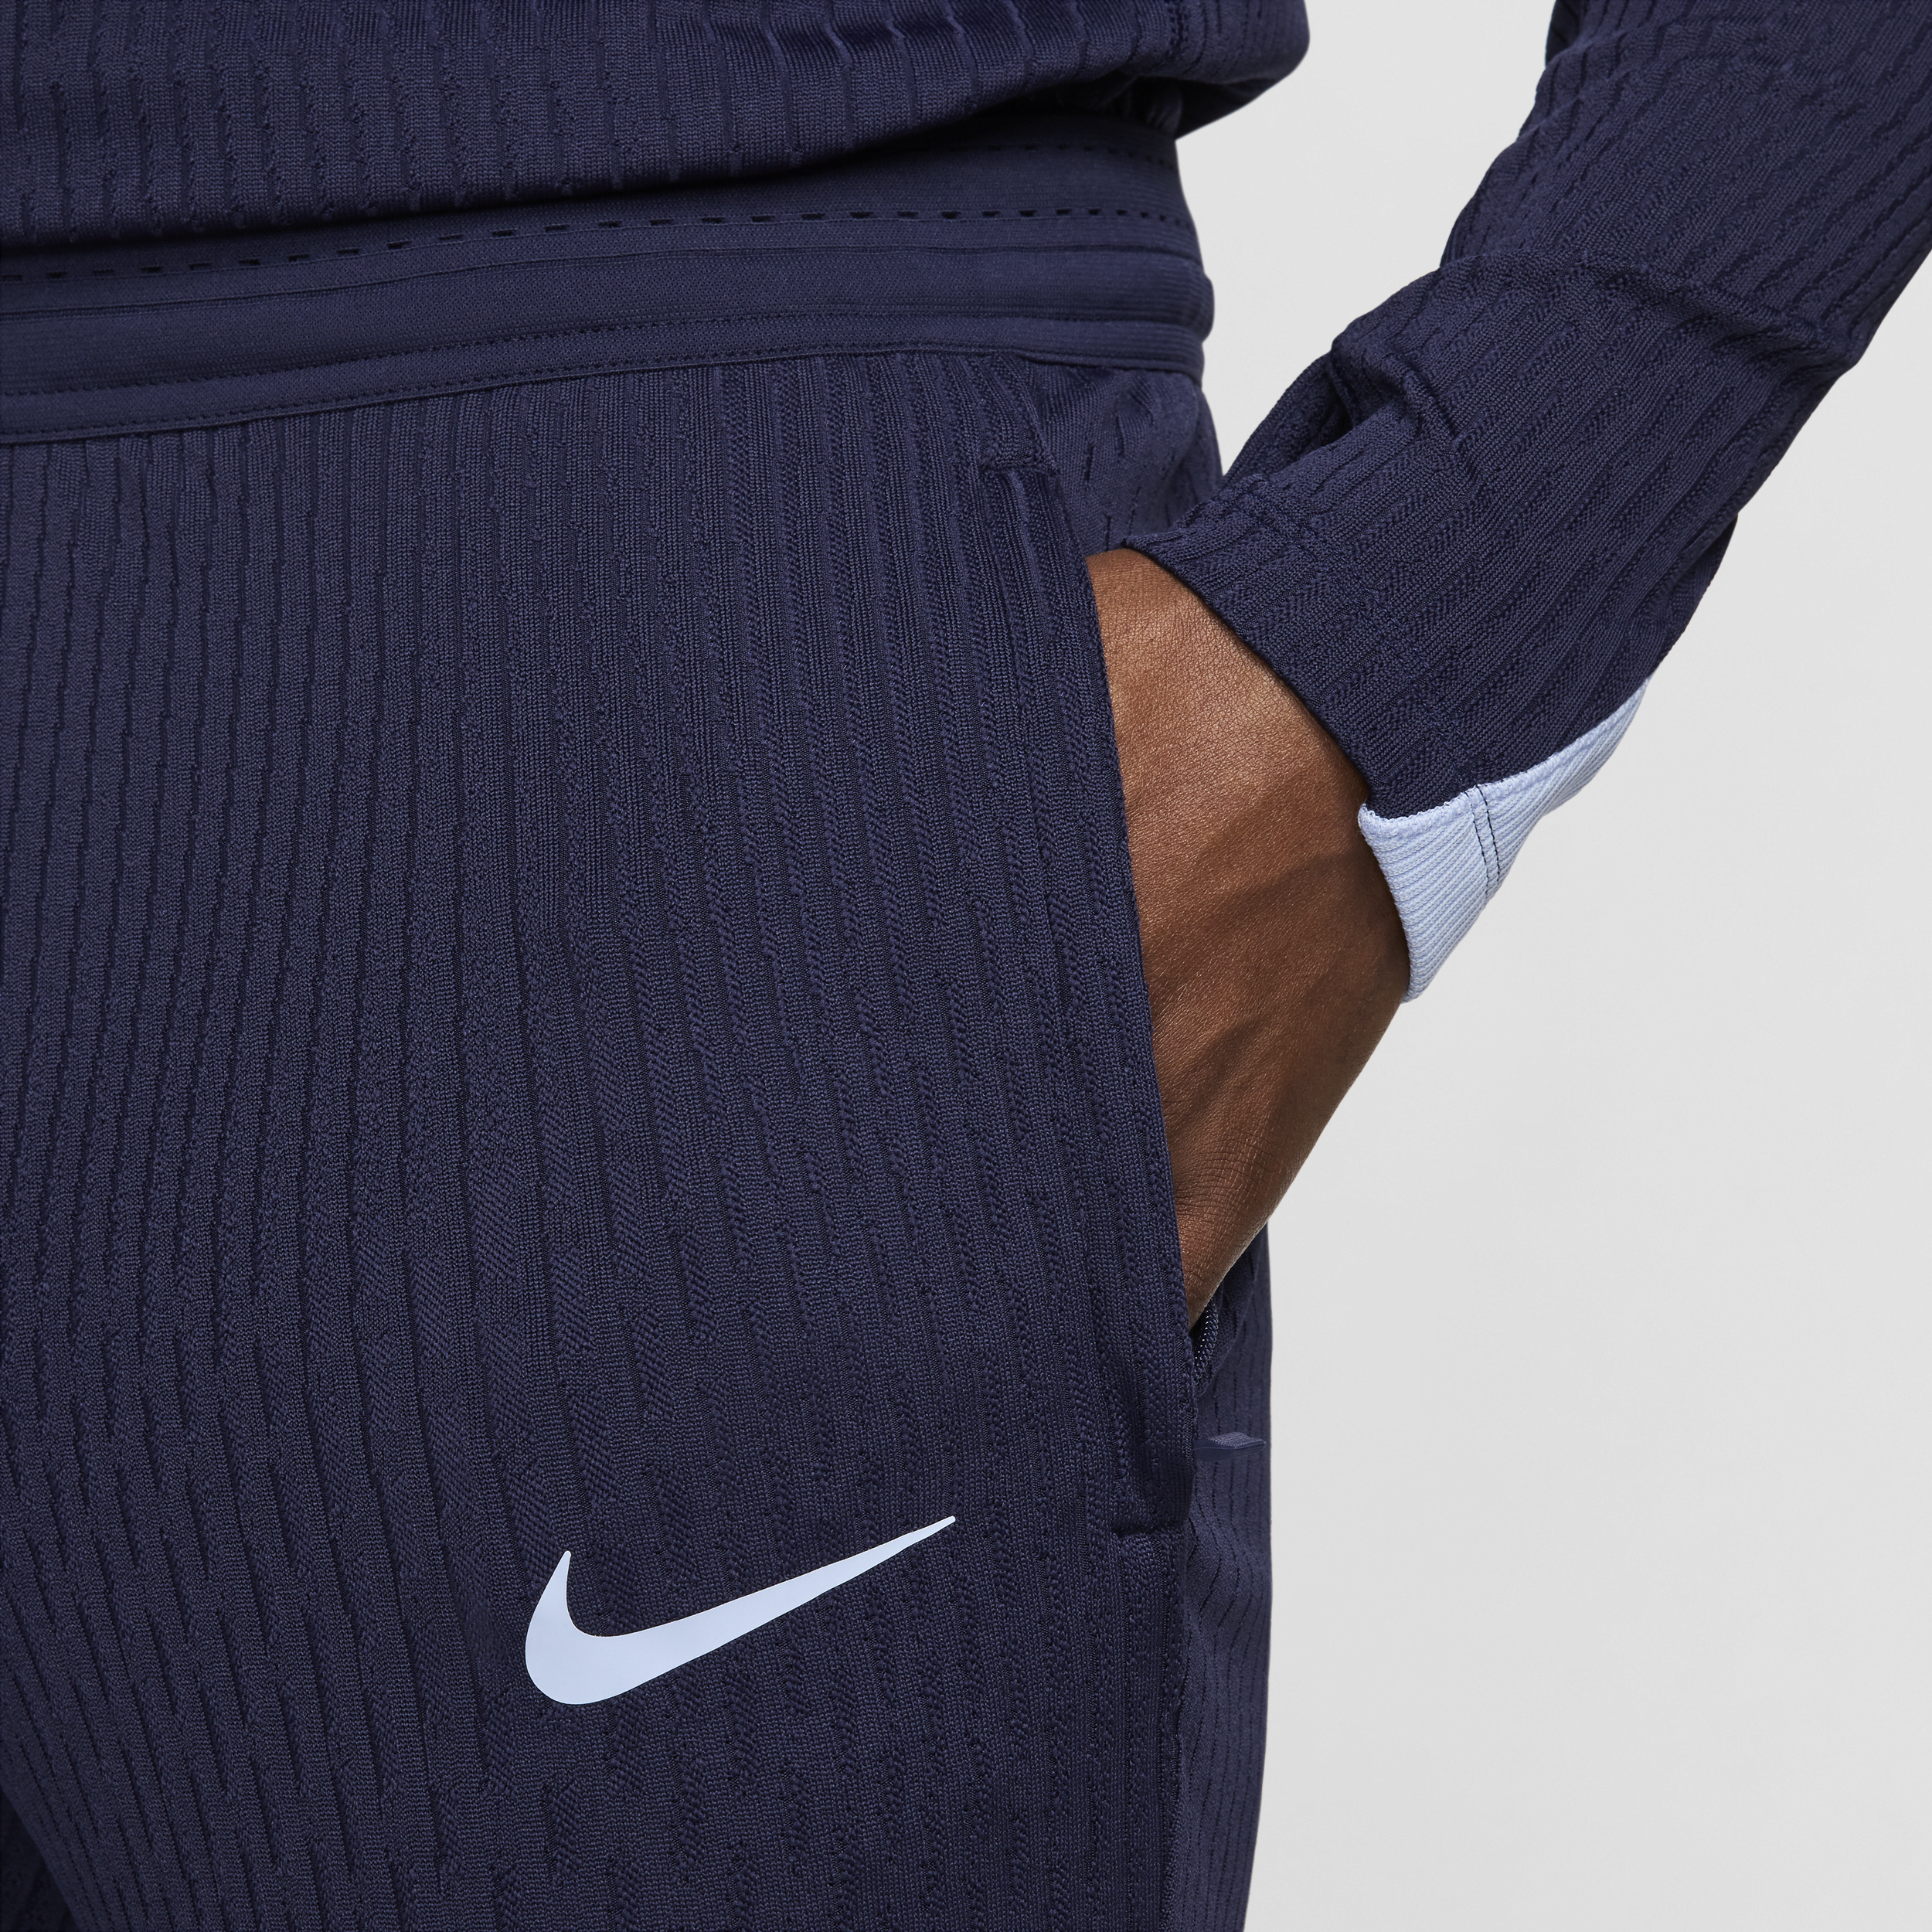 Nike FFF Strike Elite Dri-FIT ADV knit voetbalbroek voor heren Blauw